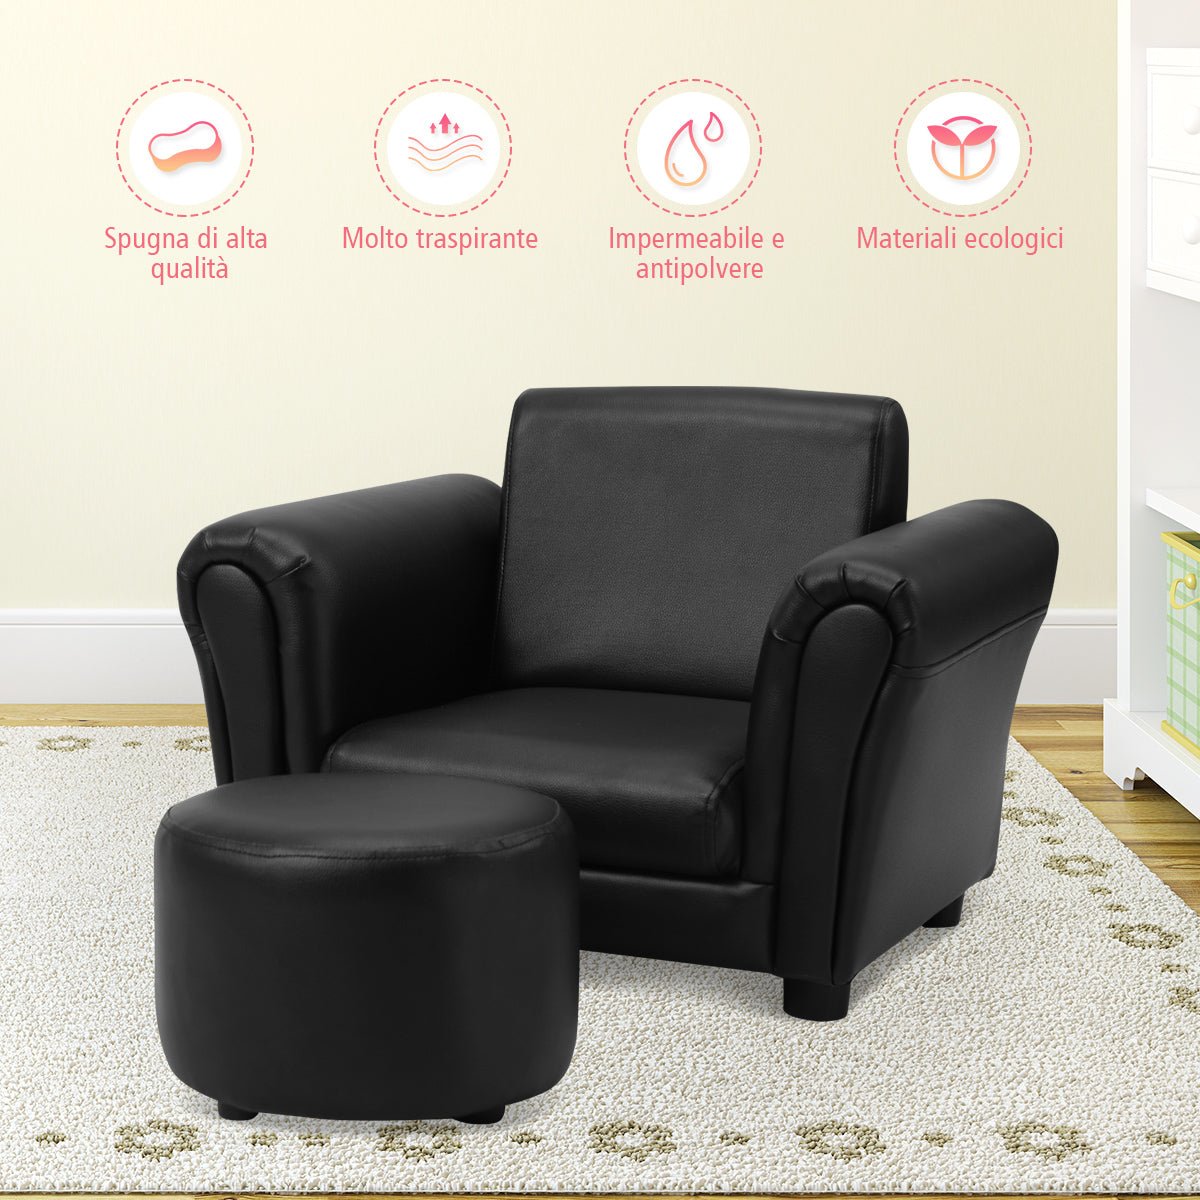 Children's Ergonomic Sofa and Footstool - Cozy Black Seating Solution